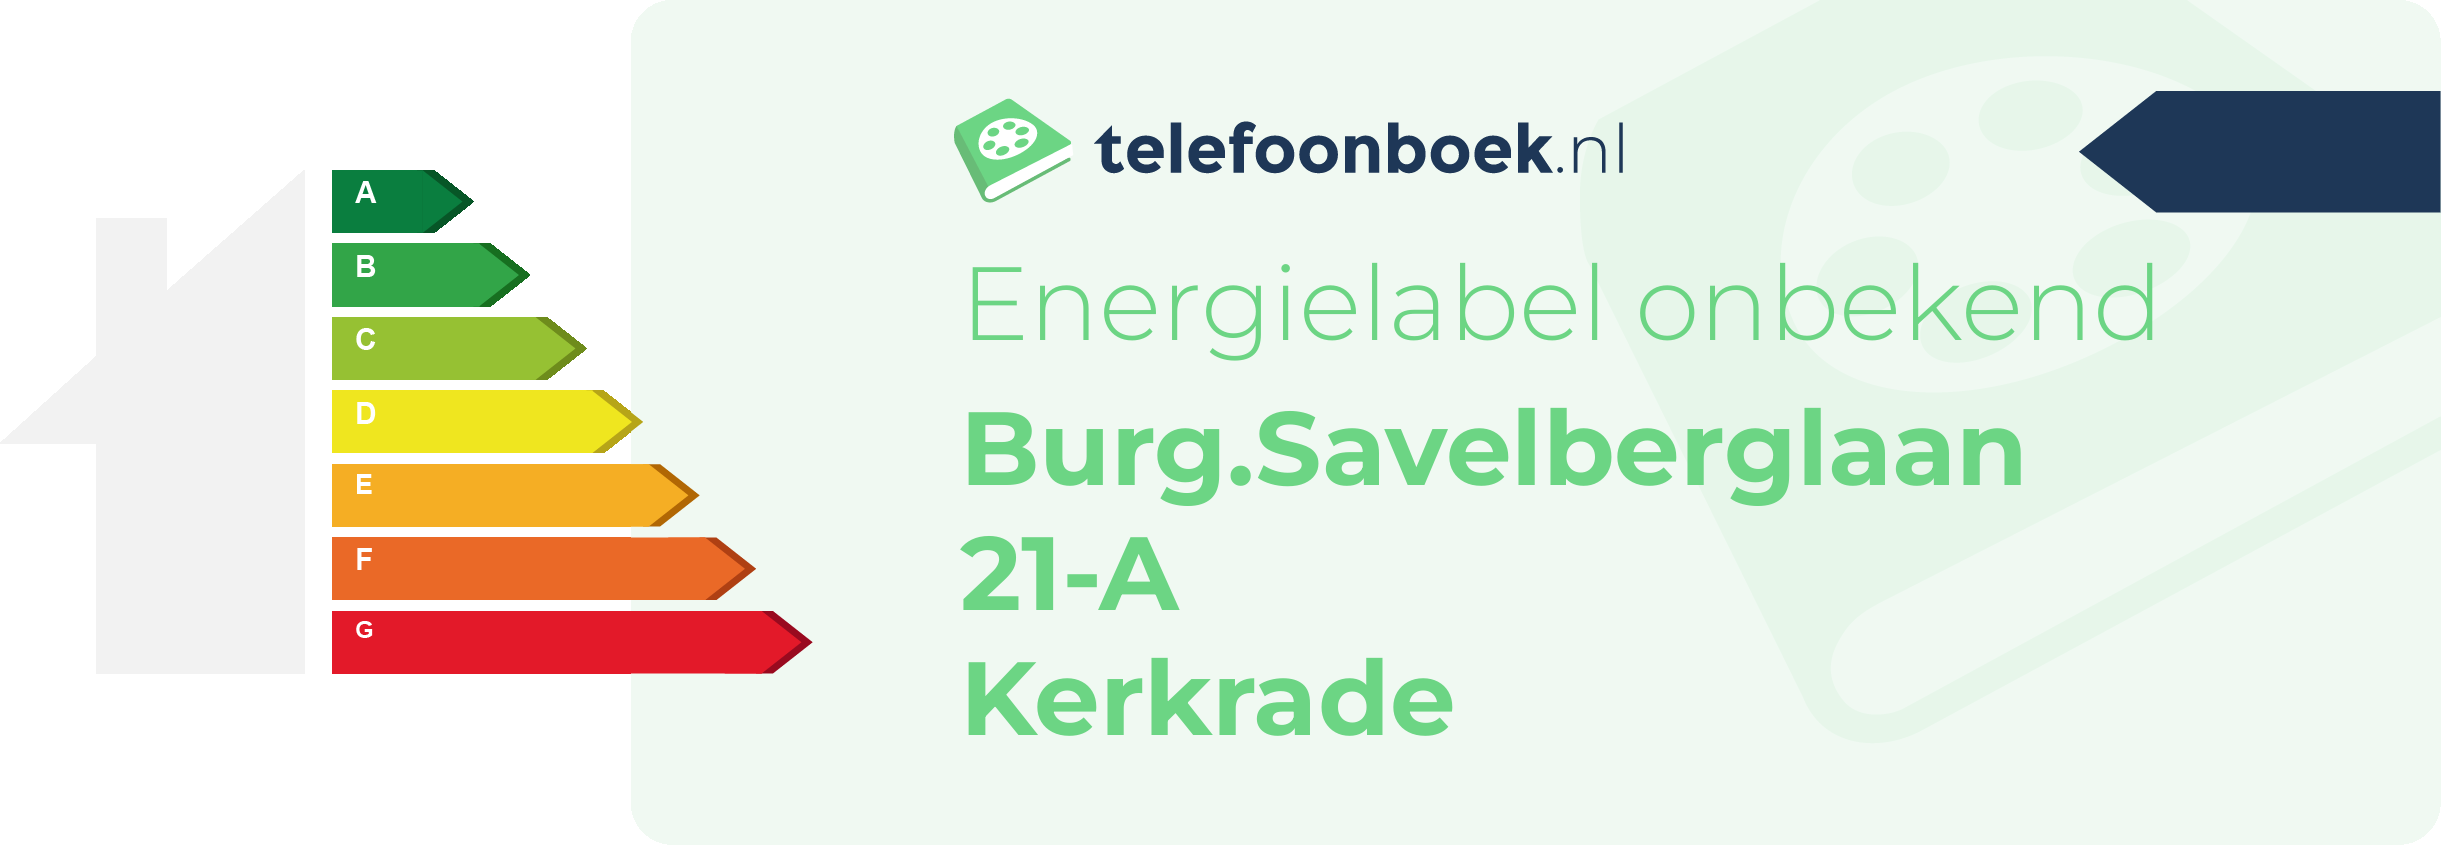 Energielabel Burg.Savelberglaan 21-A Kerkrade